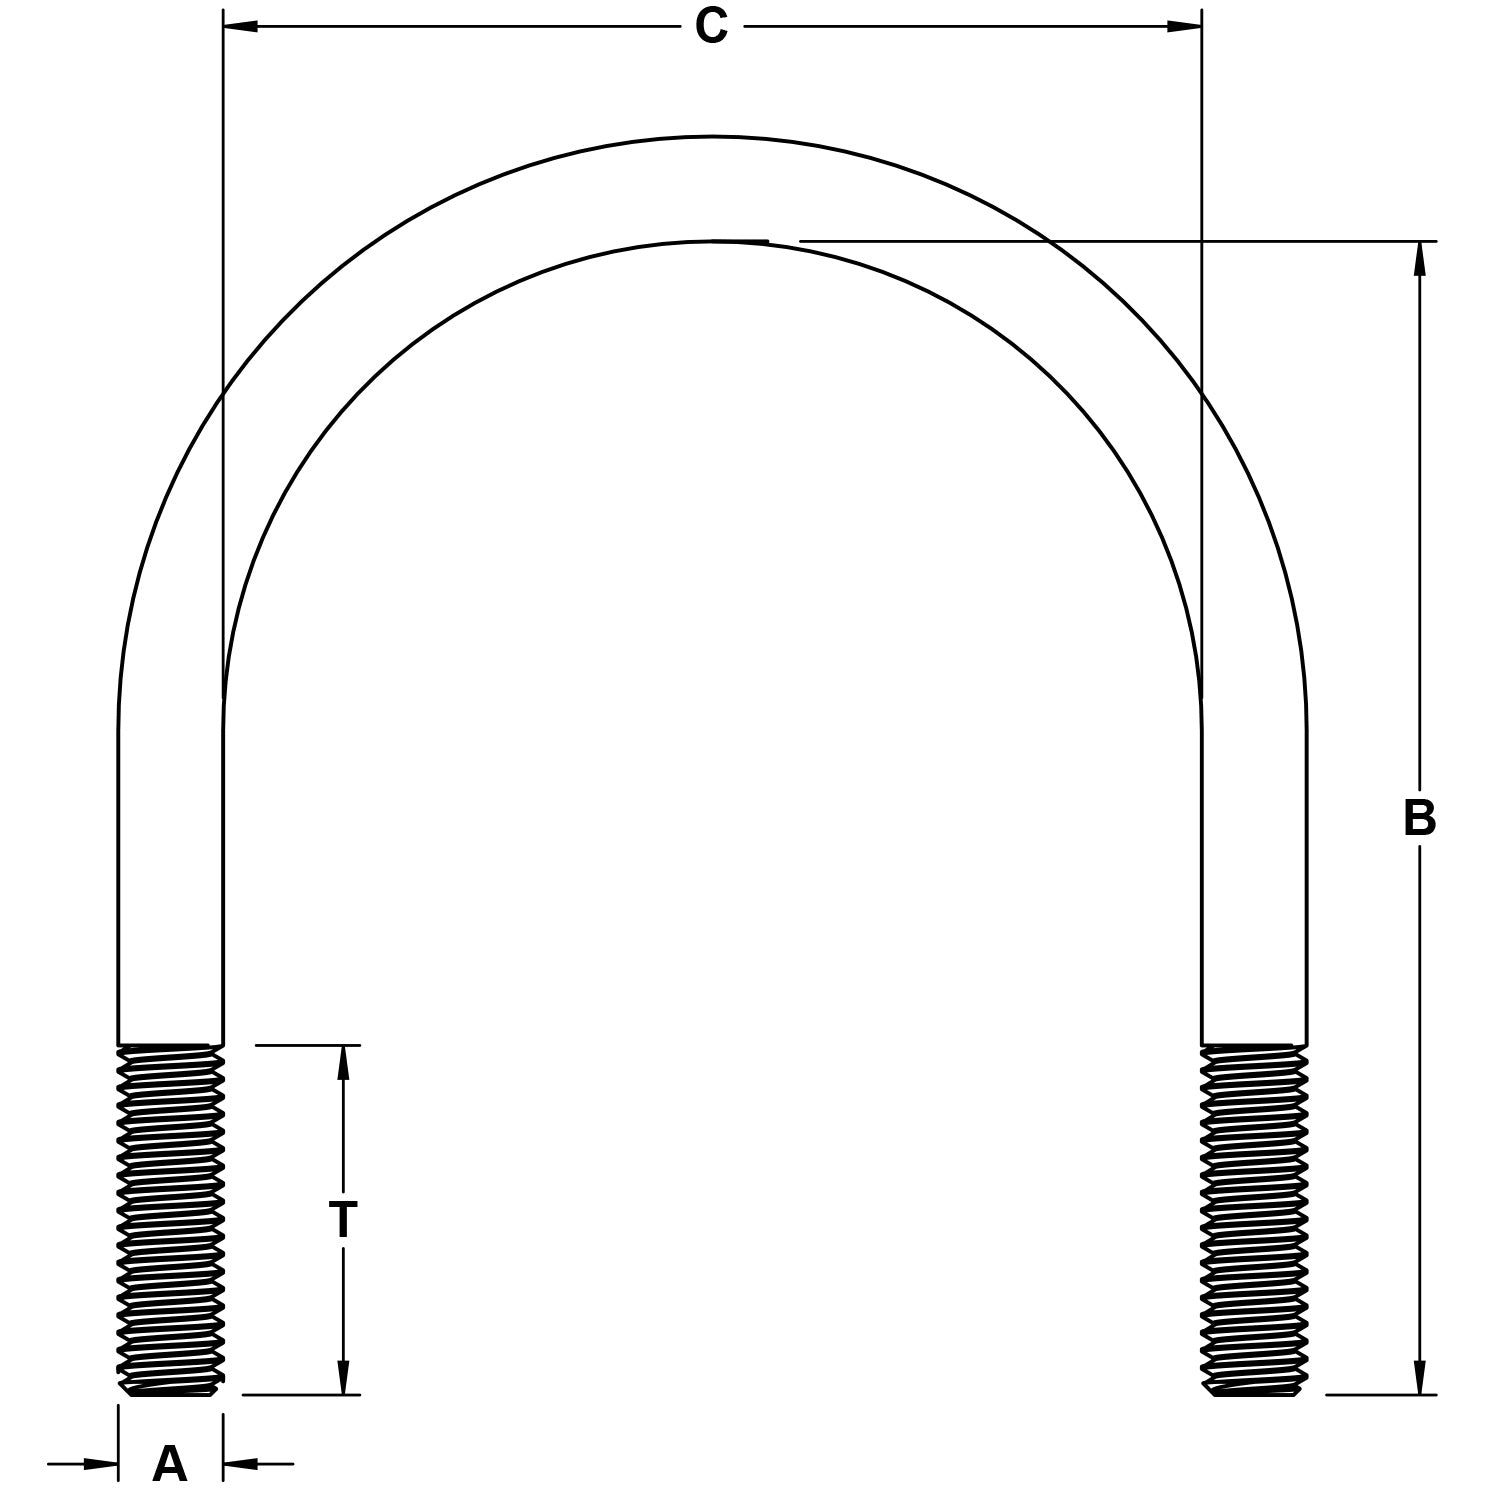 5lg-chicago-hardware-hot-dip-galvanized-round-bend-u-bolt-with-plate-specs